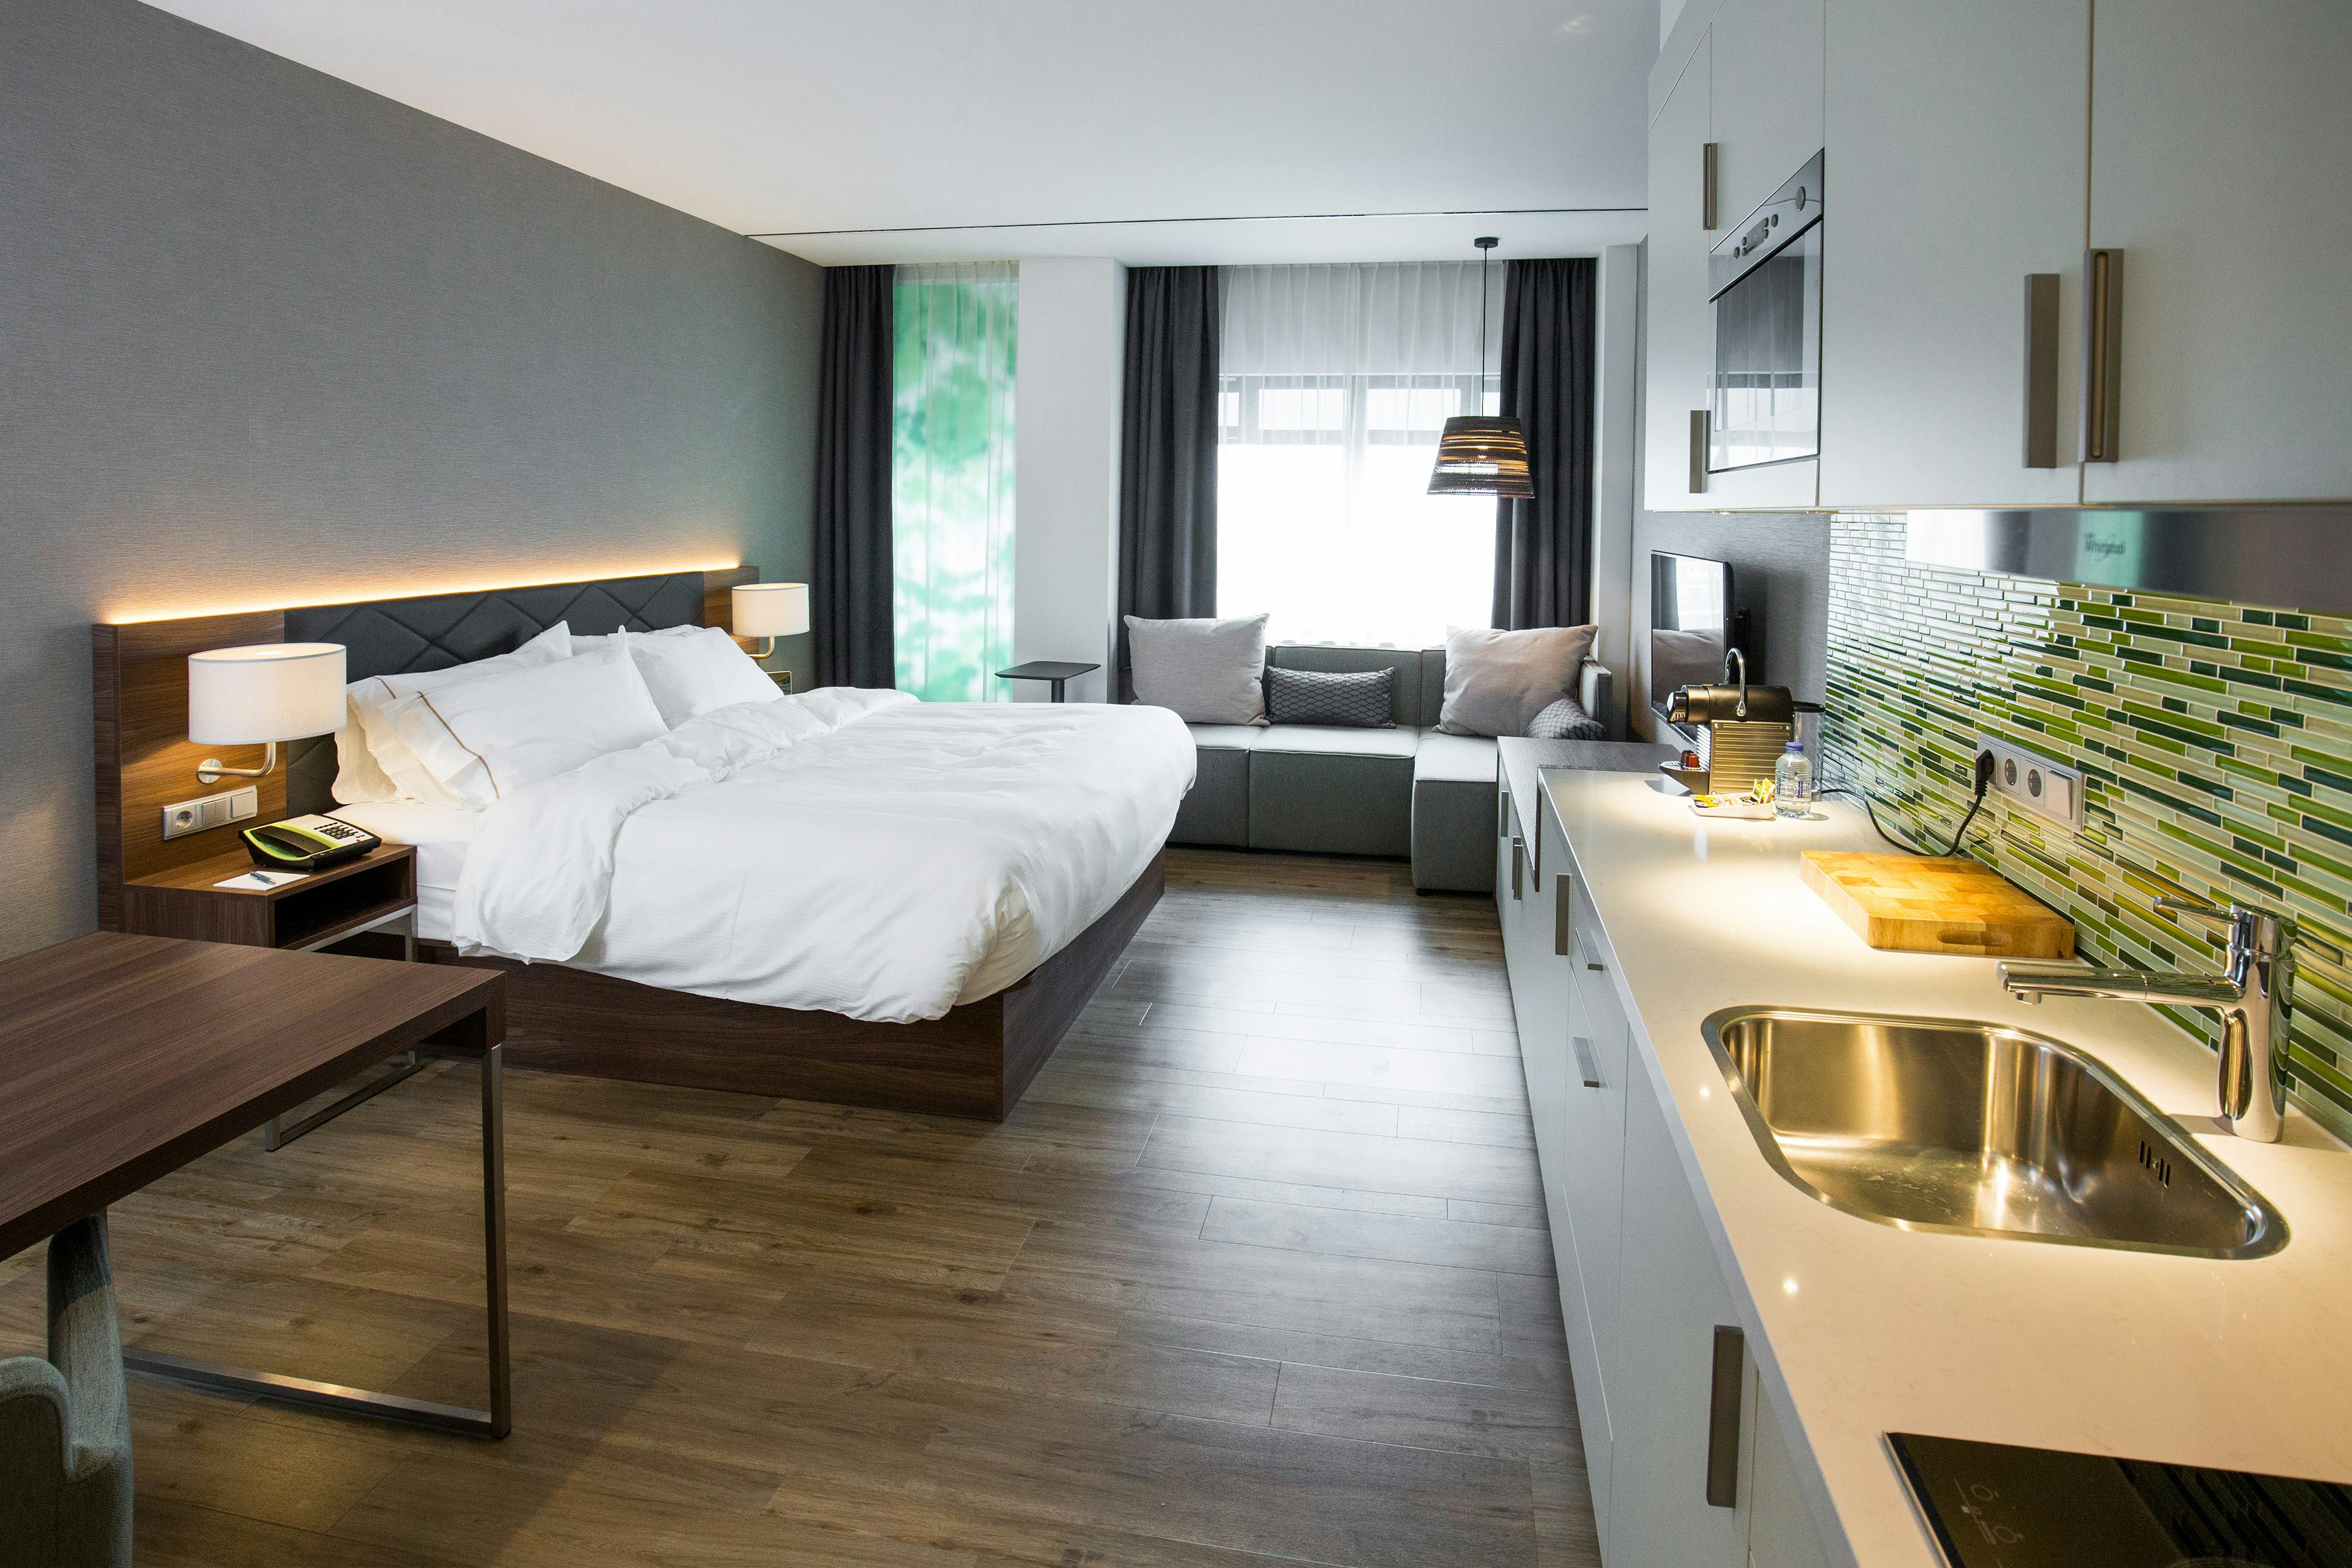 Element Amsterdam: Extended stay met keuken op de kamer